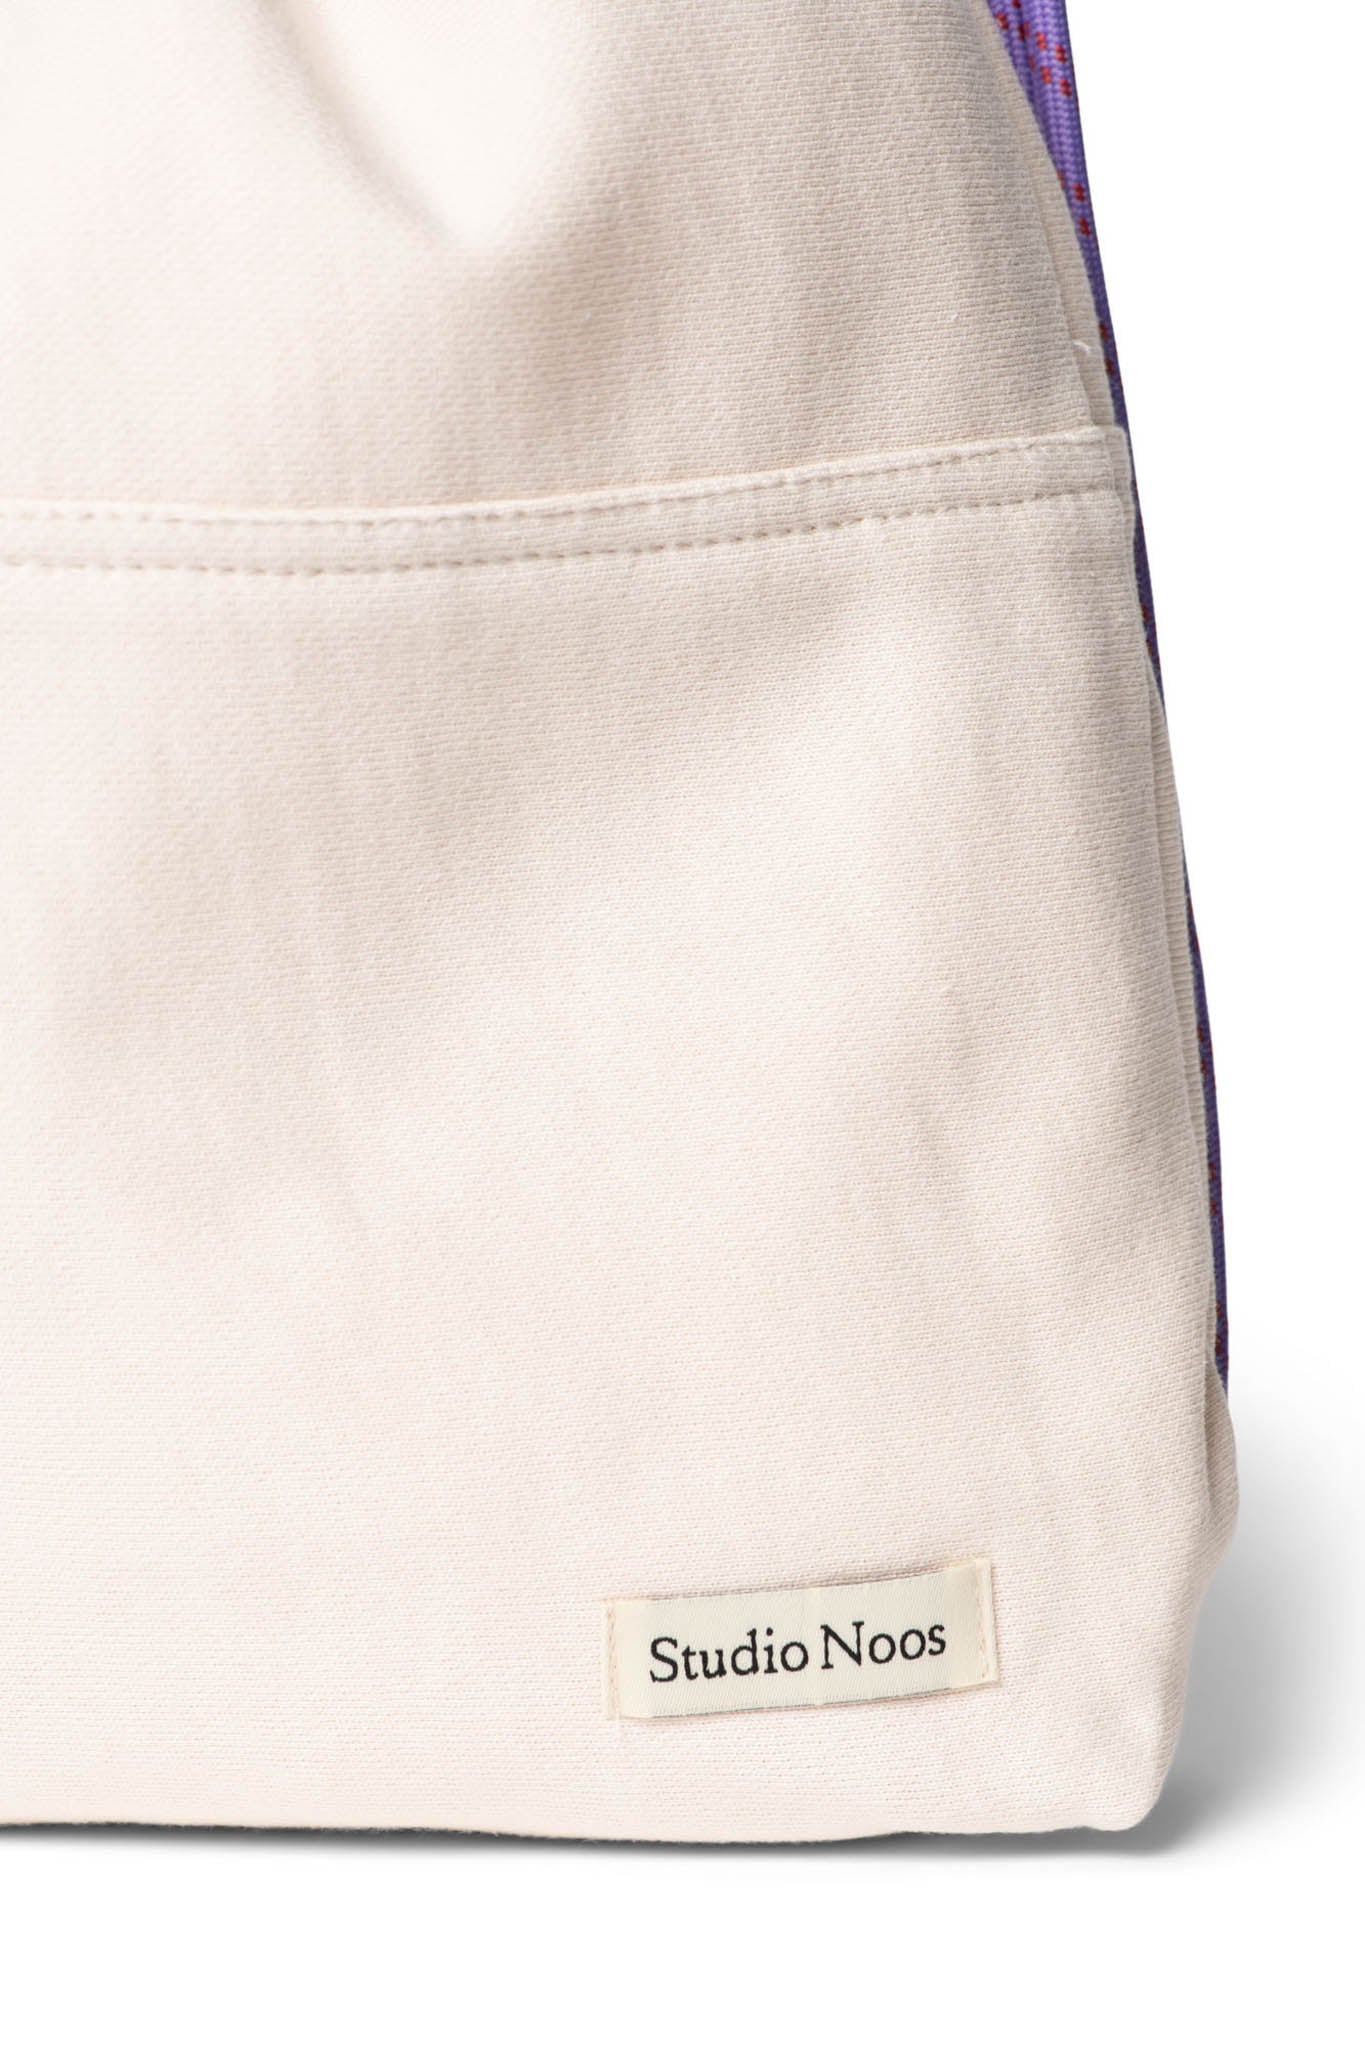 Studio Noos - Rucksack / Turnbeutel "Jersey Gym Bag" | off-white / lilac - Leja Concept Store